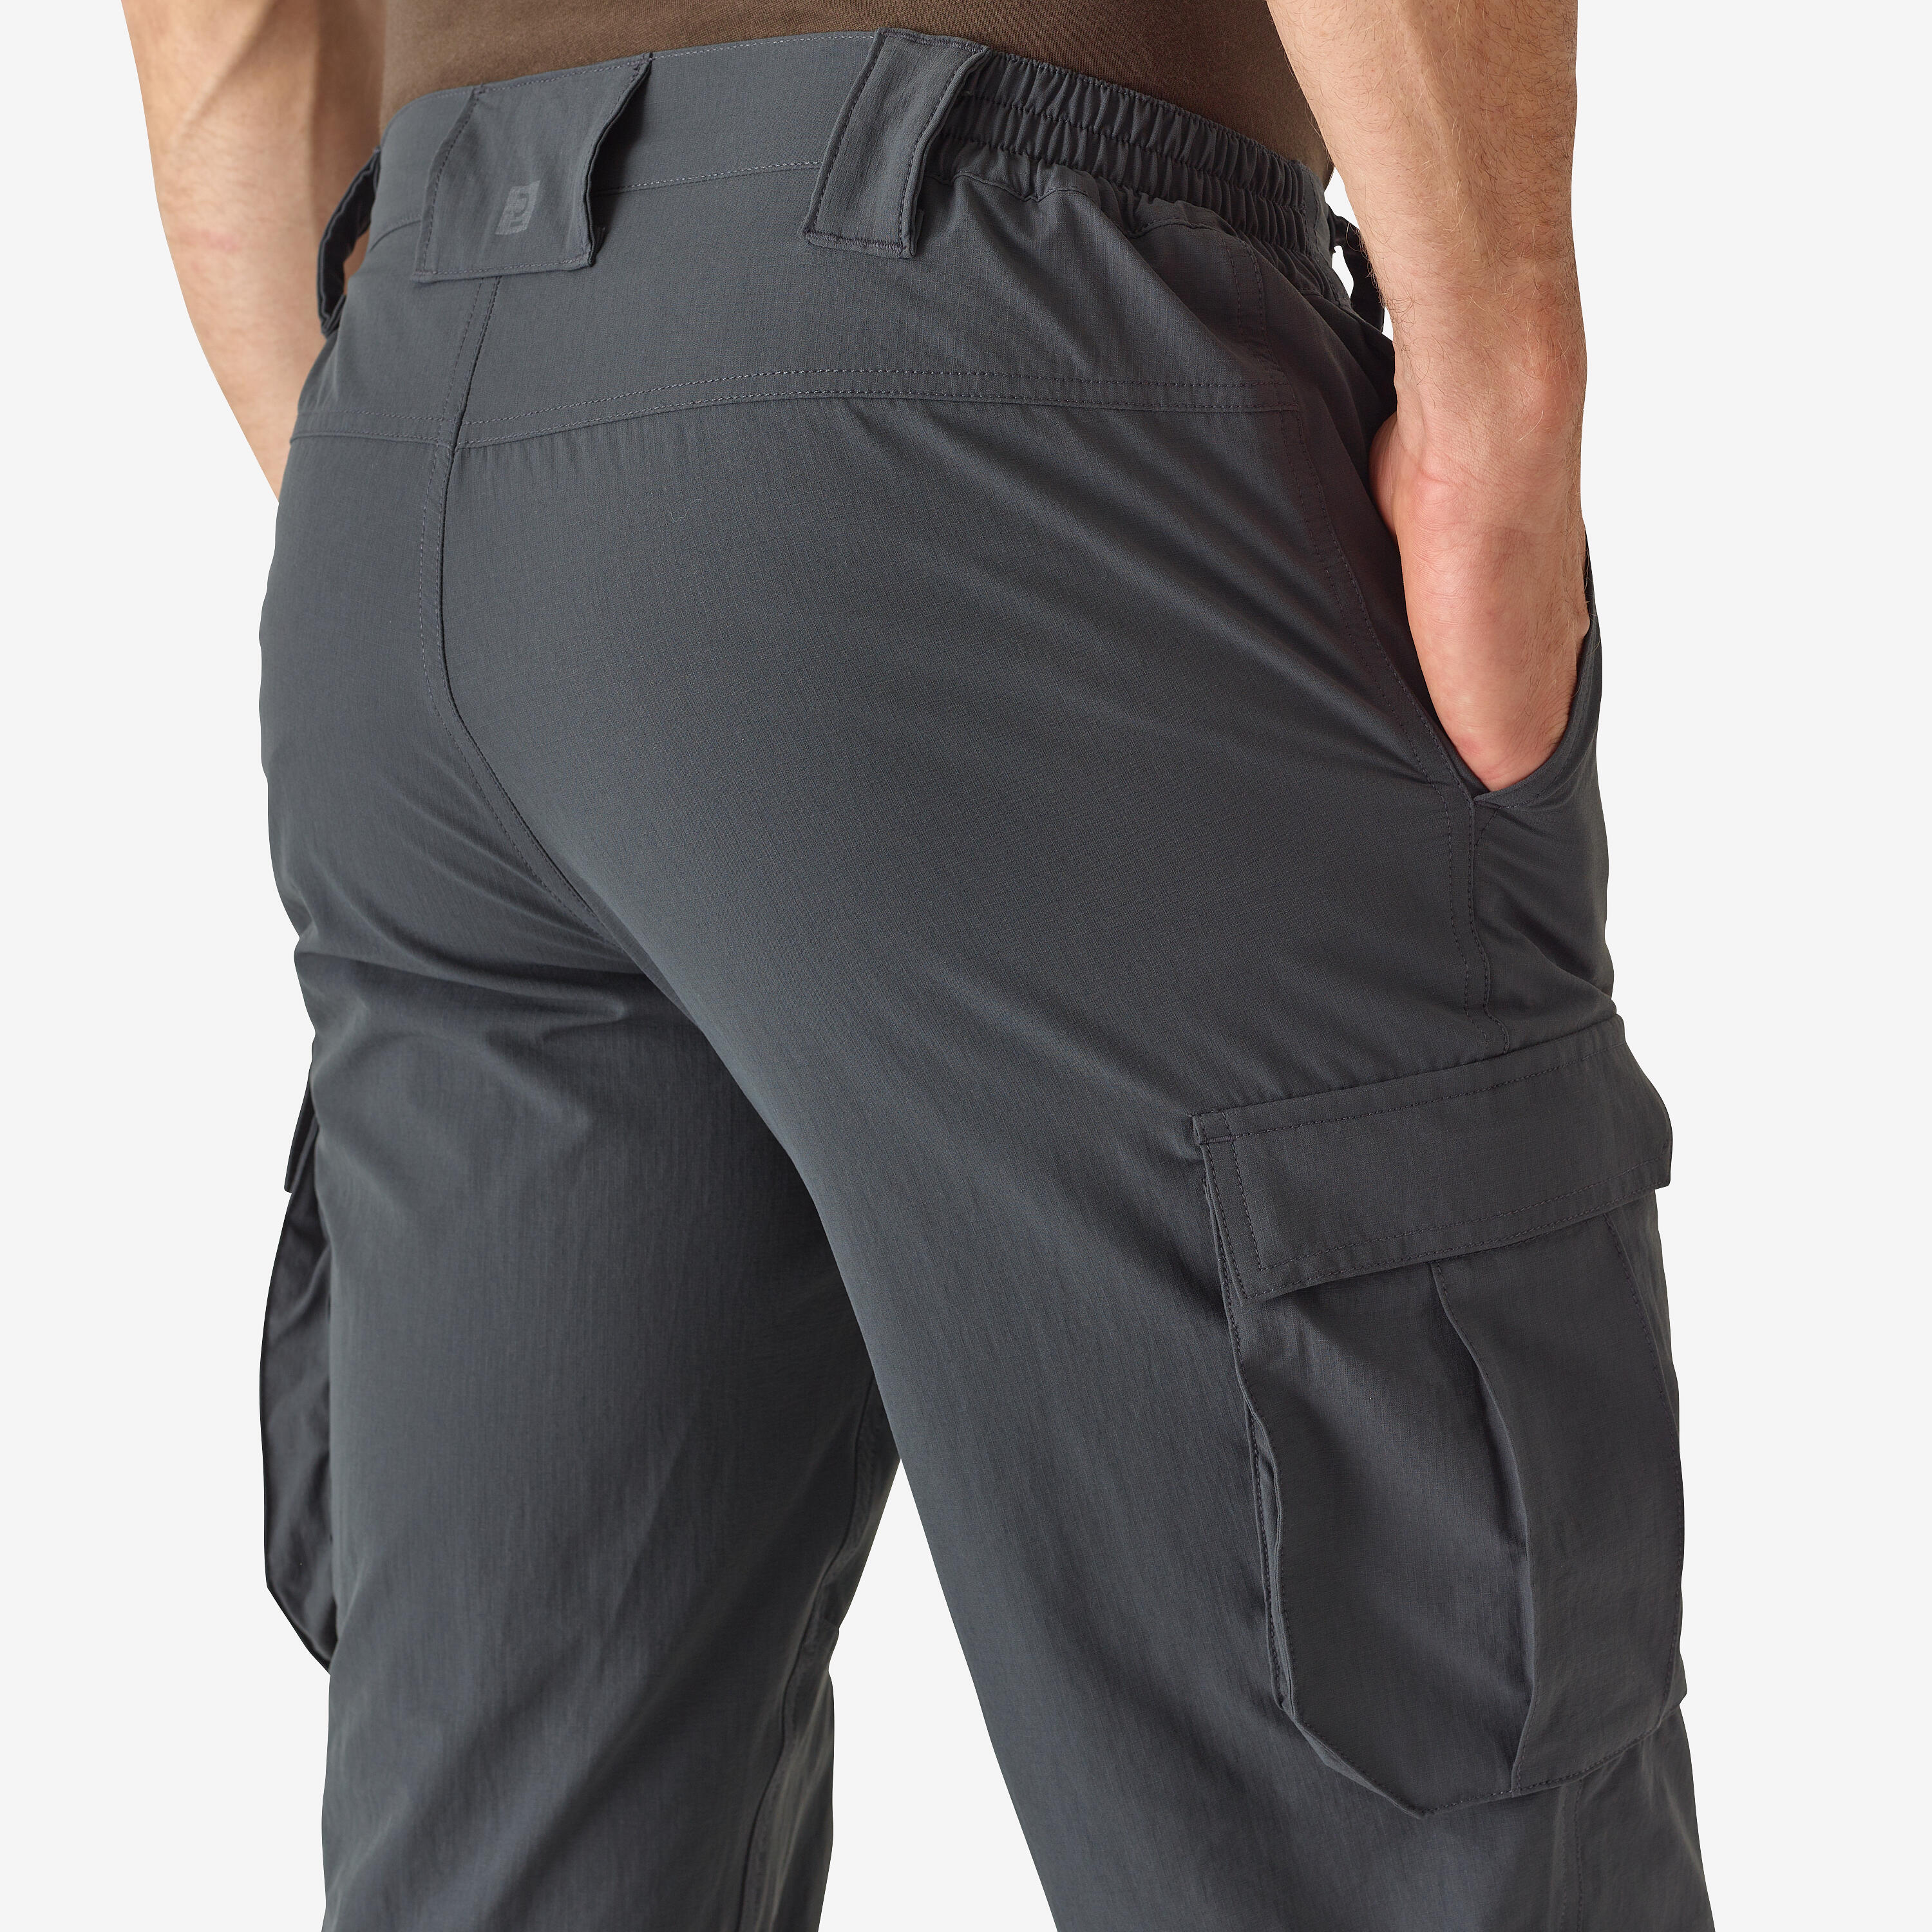 Men's Pants with Elastic Waist and Belt Loops | LAPG